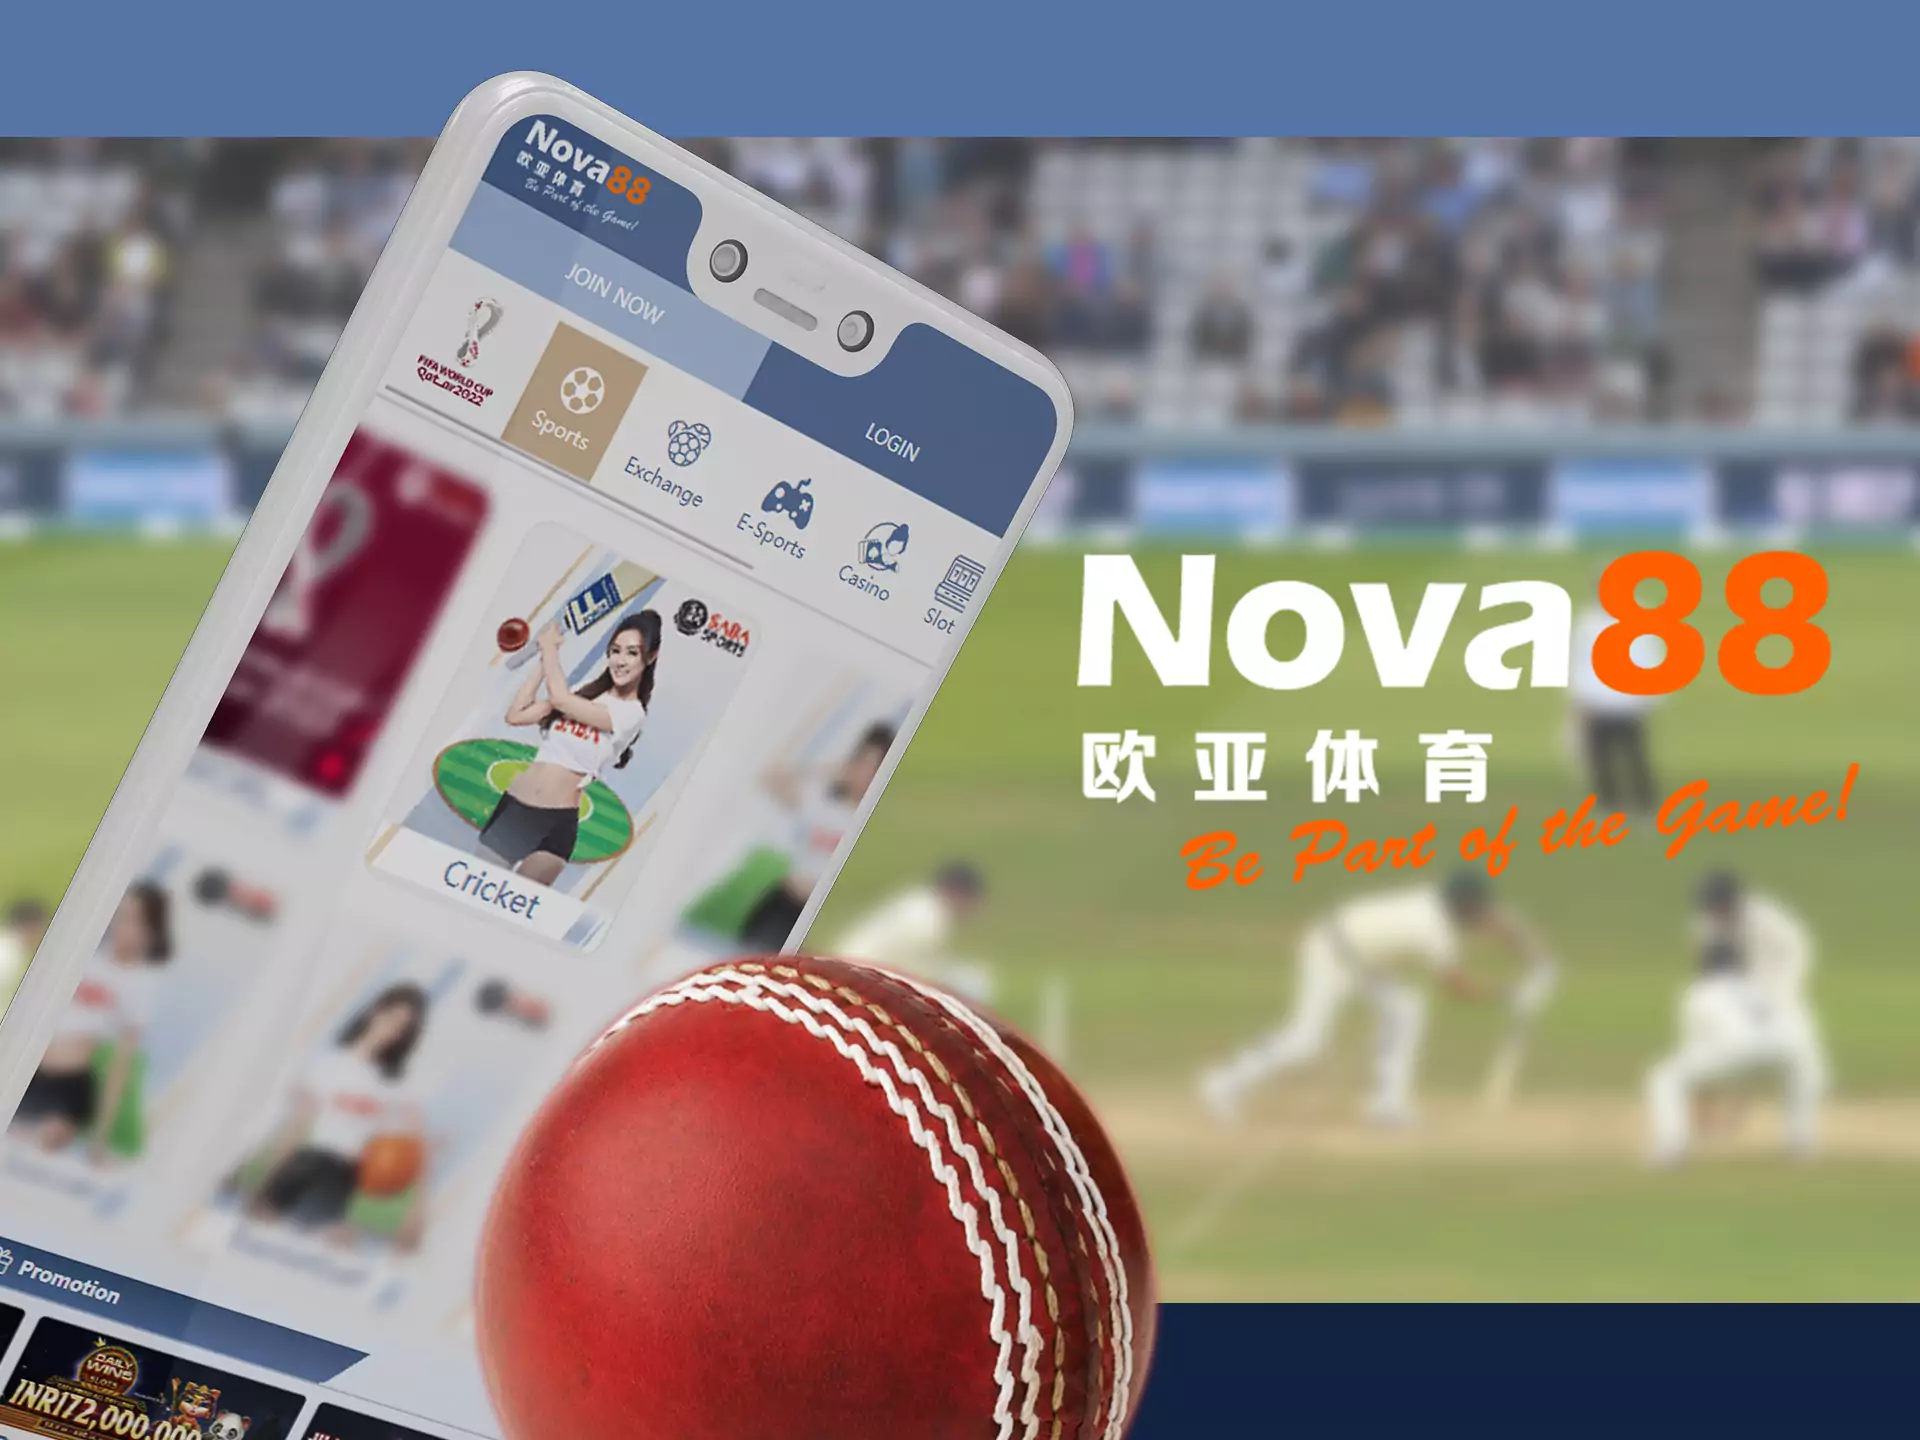 Nova88 app is the best app for cricket betting.